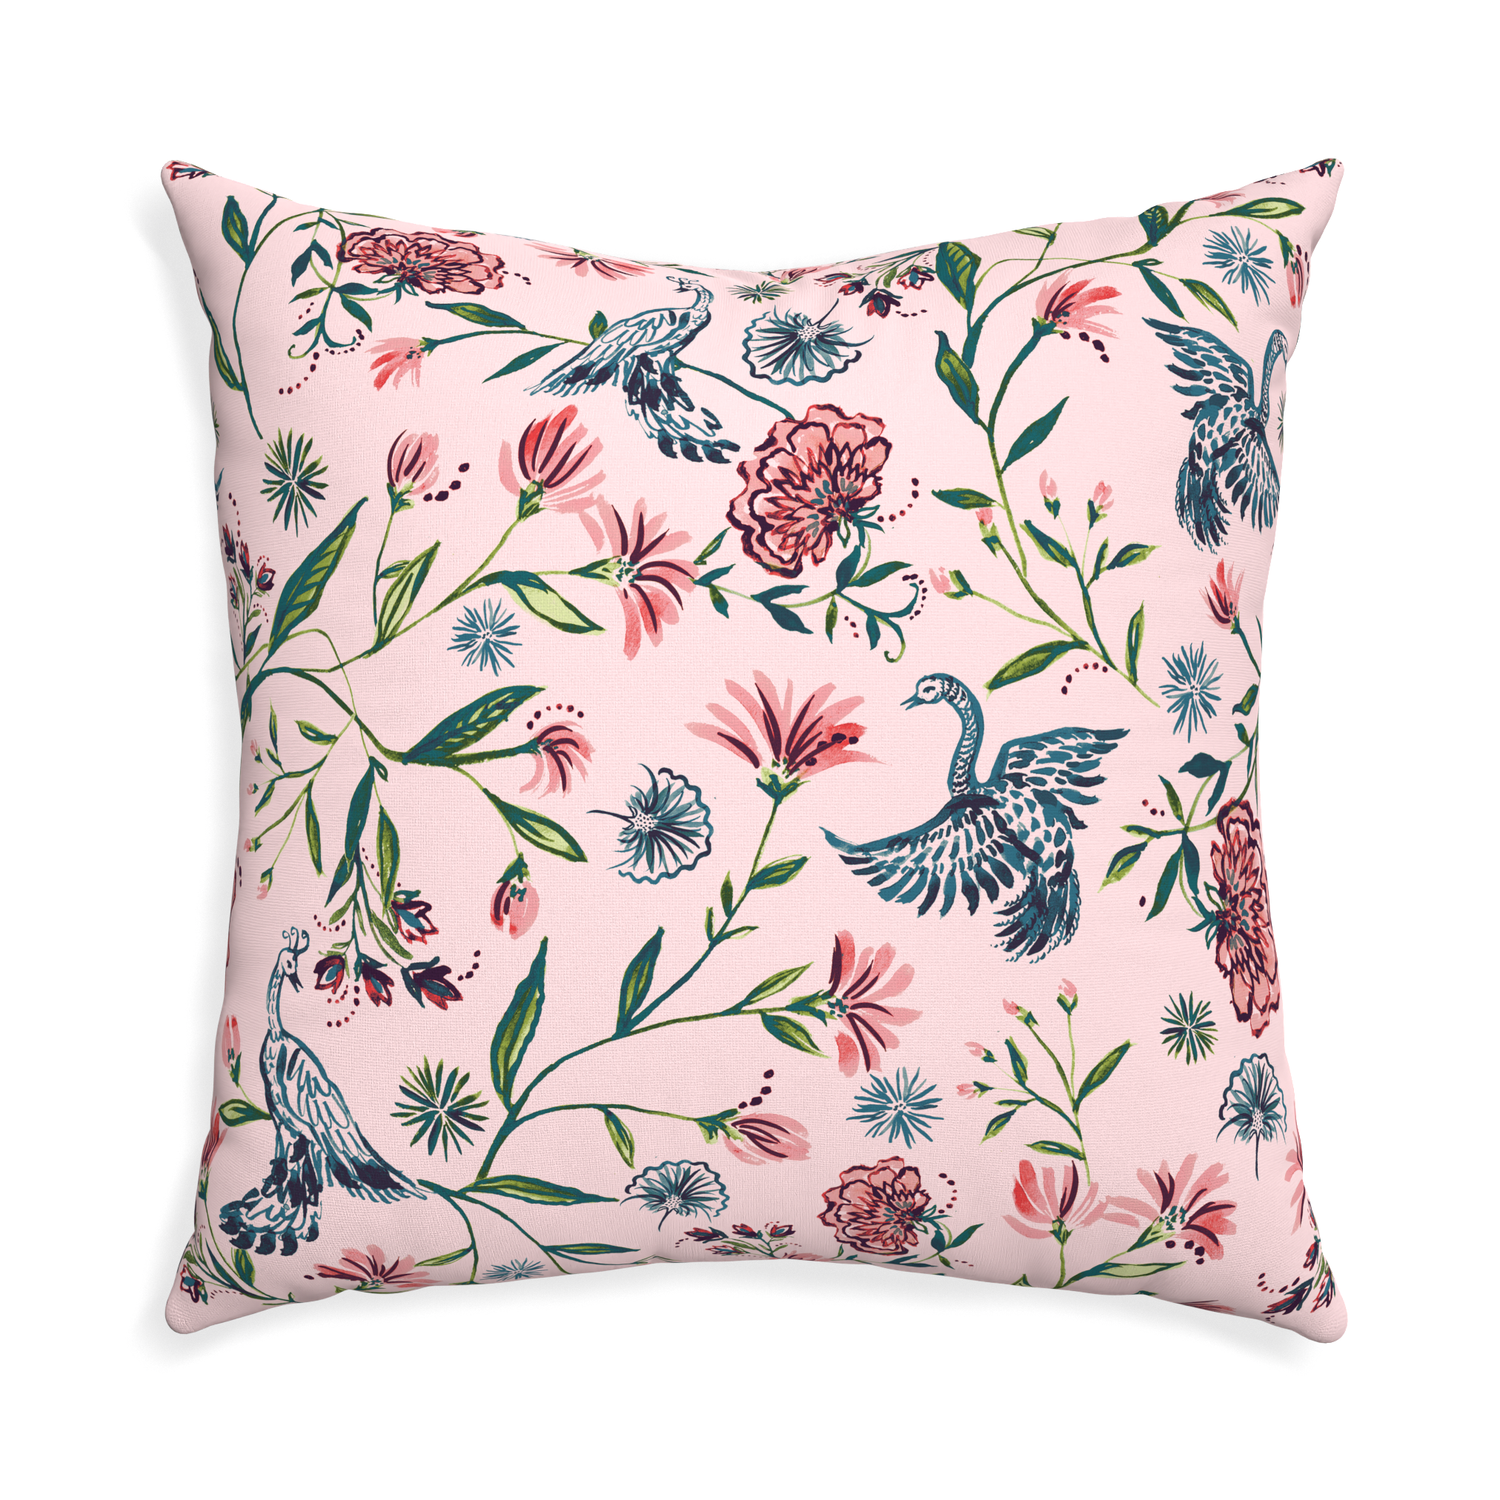 Euro-sham daphne rose custom pillow with none on white background